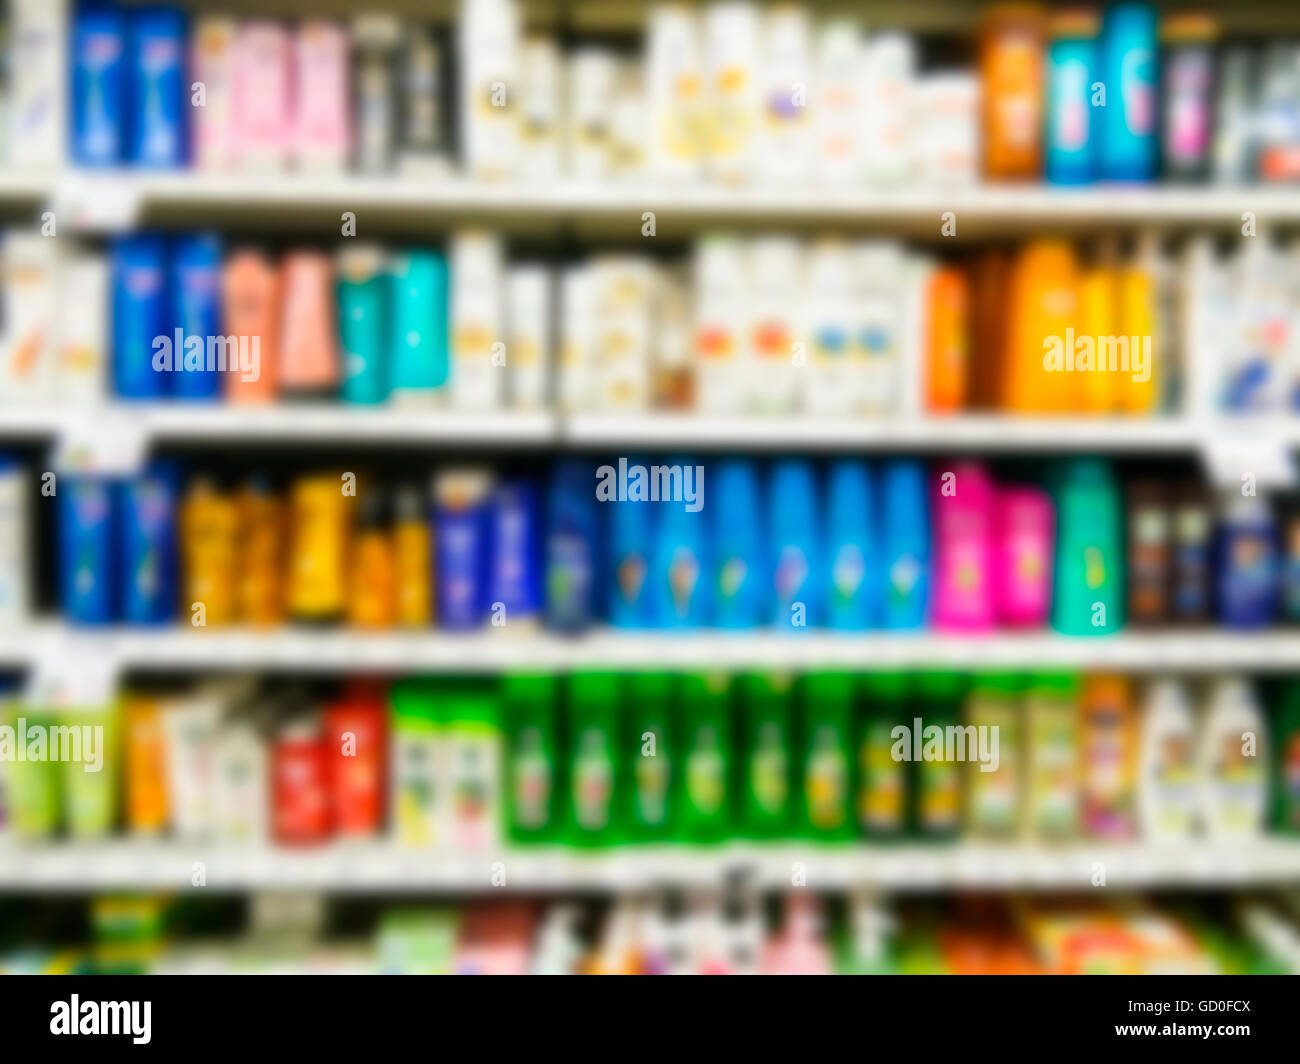 https://c8.alamy.com/comp/GD0FCX/blurred-colorful-supermarket-products-on-shelves-shampoo-bottles-background-GD0FCX.jpg